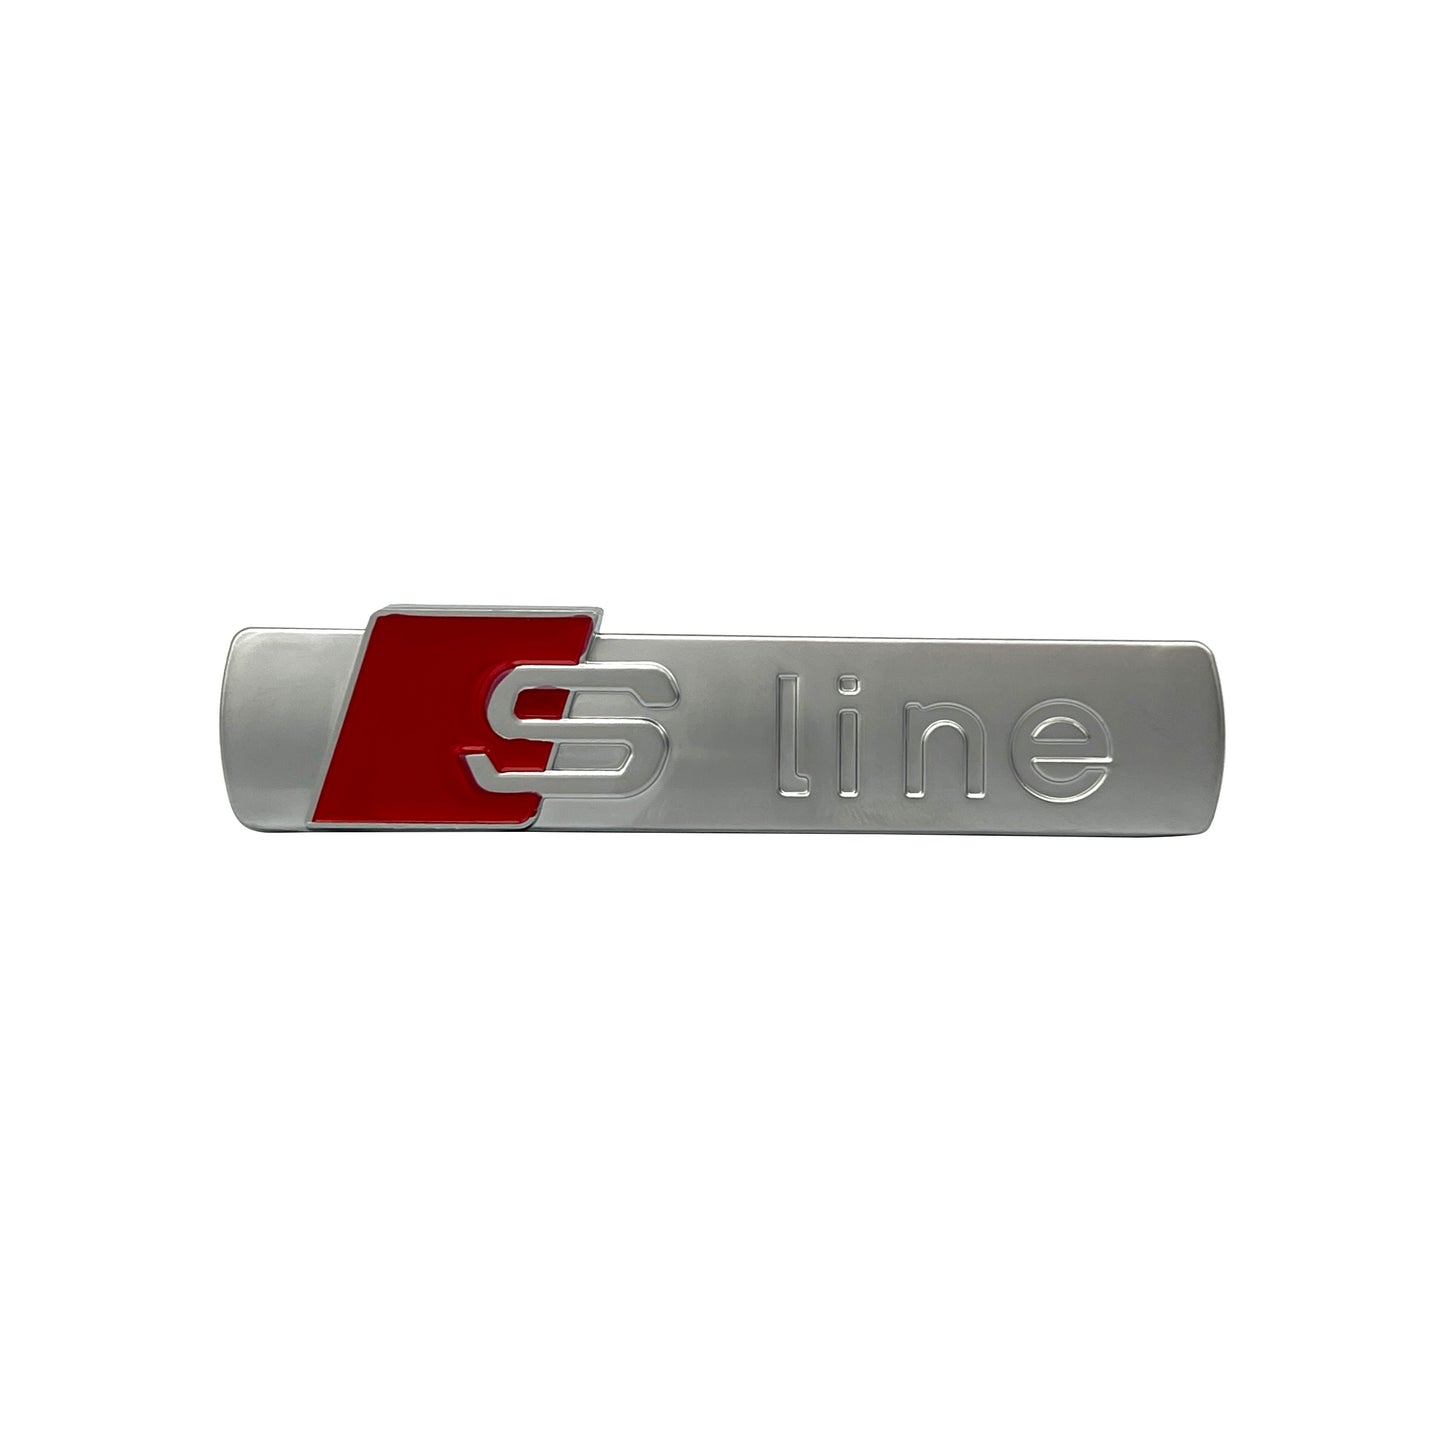 Audi S LINE Grill Emblem Front Hood Grille Badge for A3 A4 A5 A6 A7 Q3 Q5 Q7